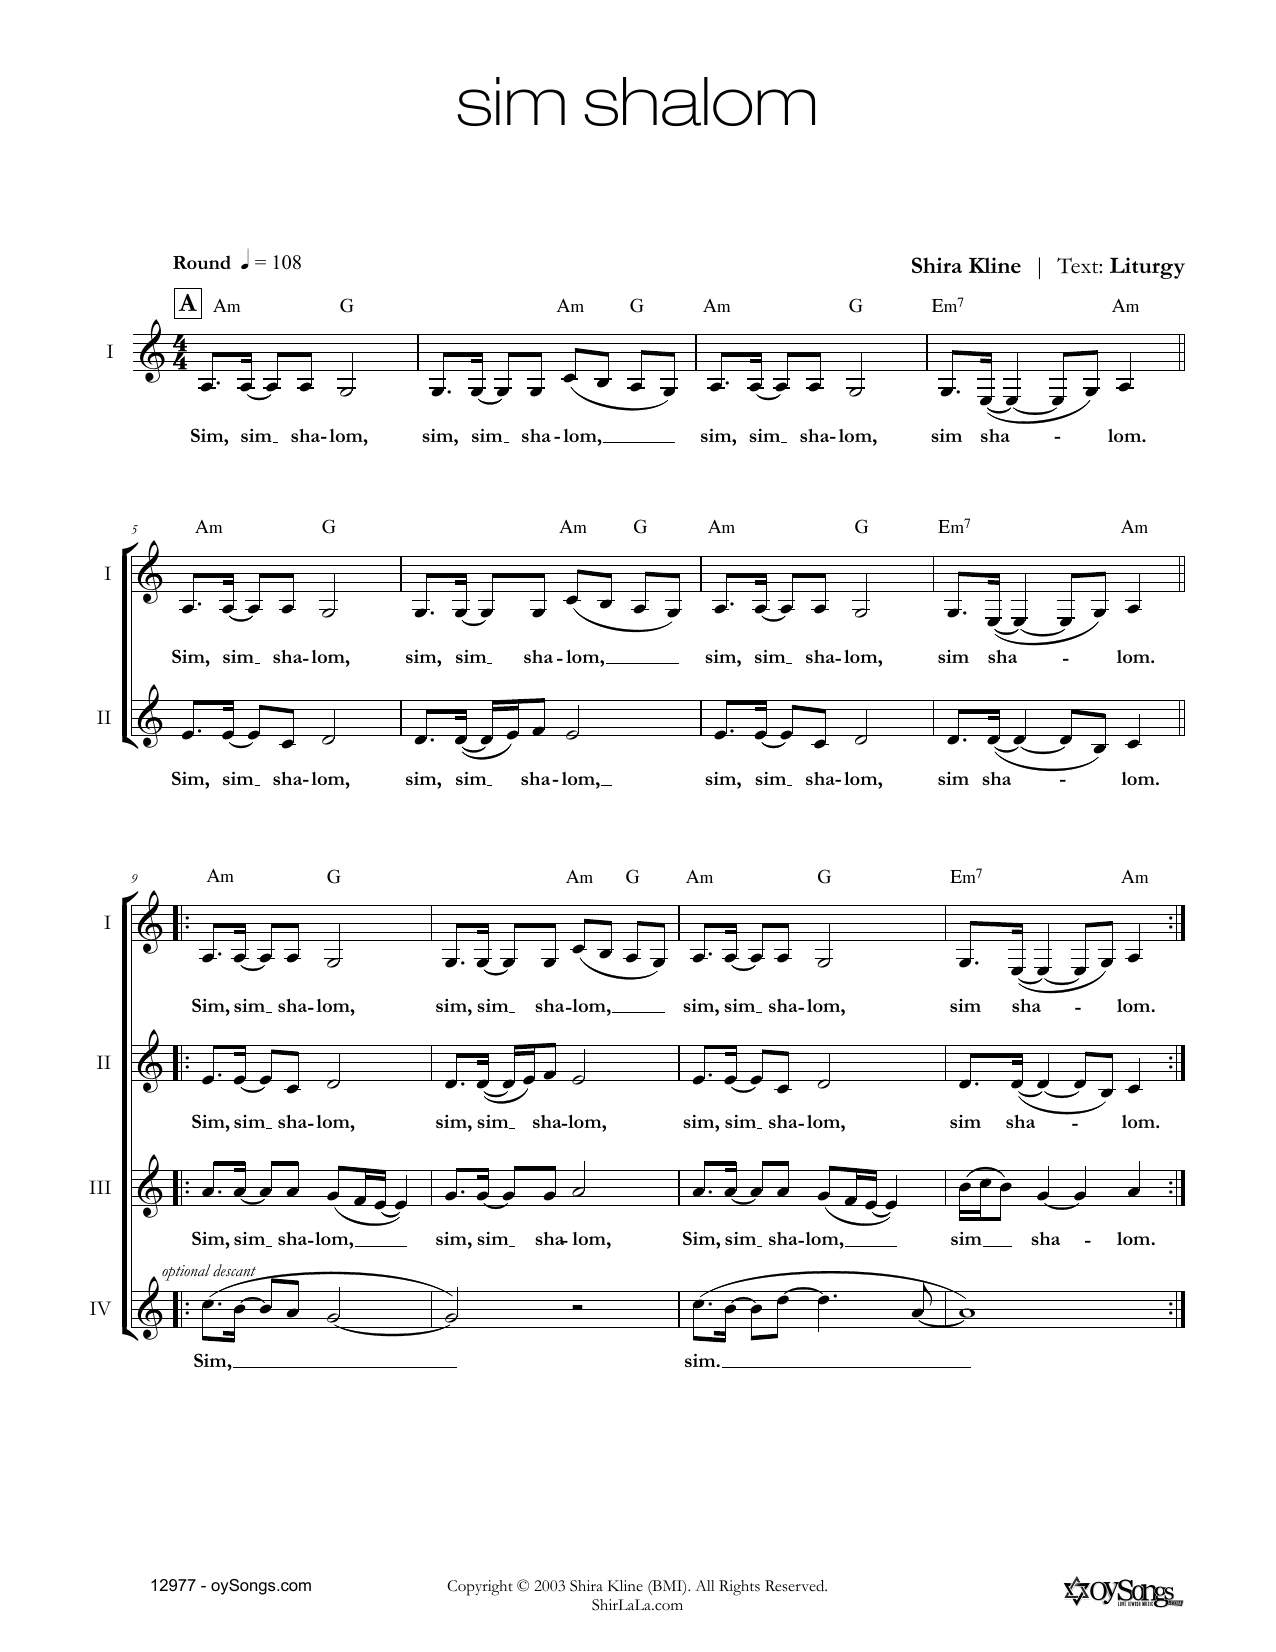 Shira Kline Sim Shalom sheet music notes and chords arranged for Lead Sheet / Fake Book